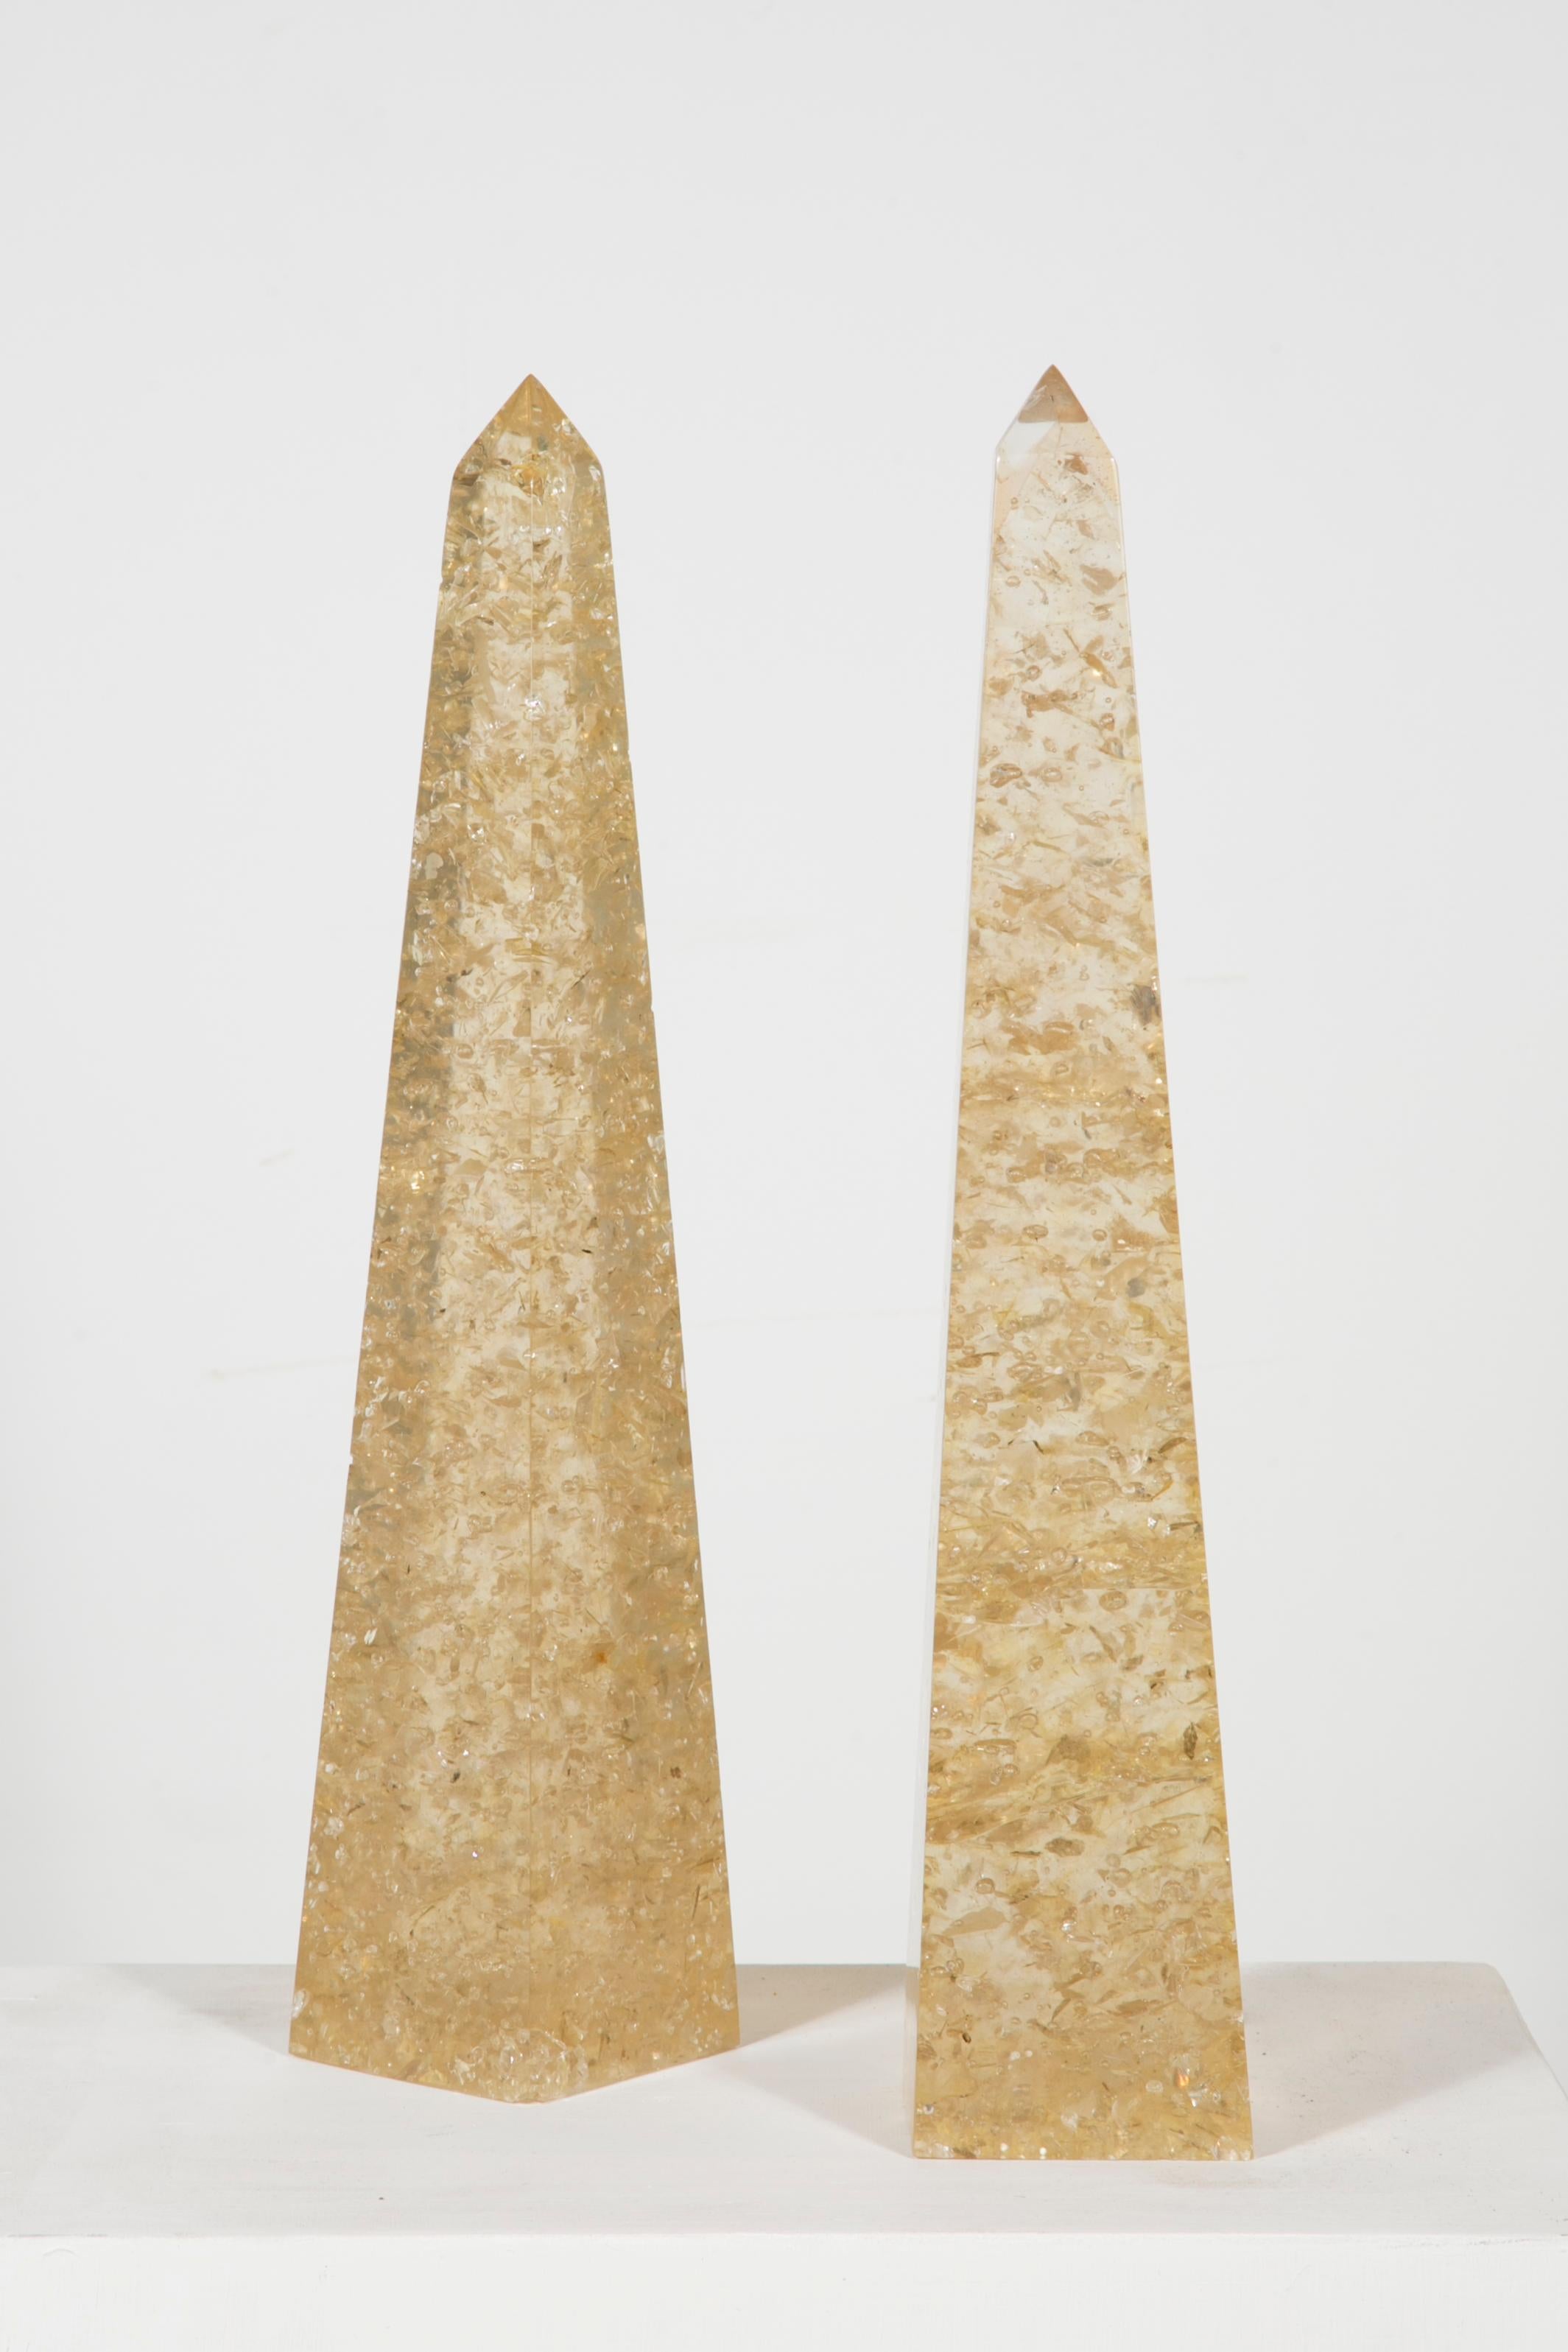 Pair of Obelisk, Giraudon, 1970 (Französisch)